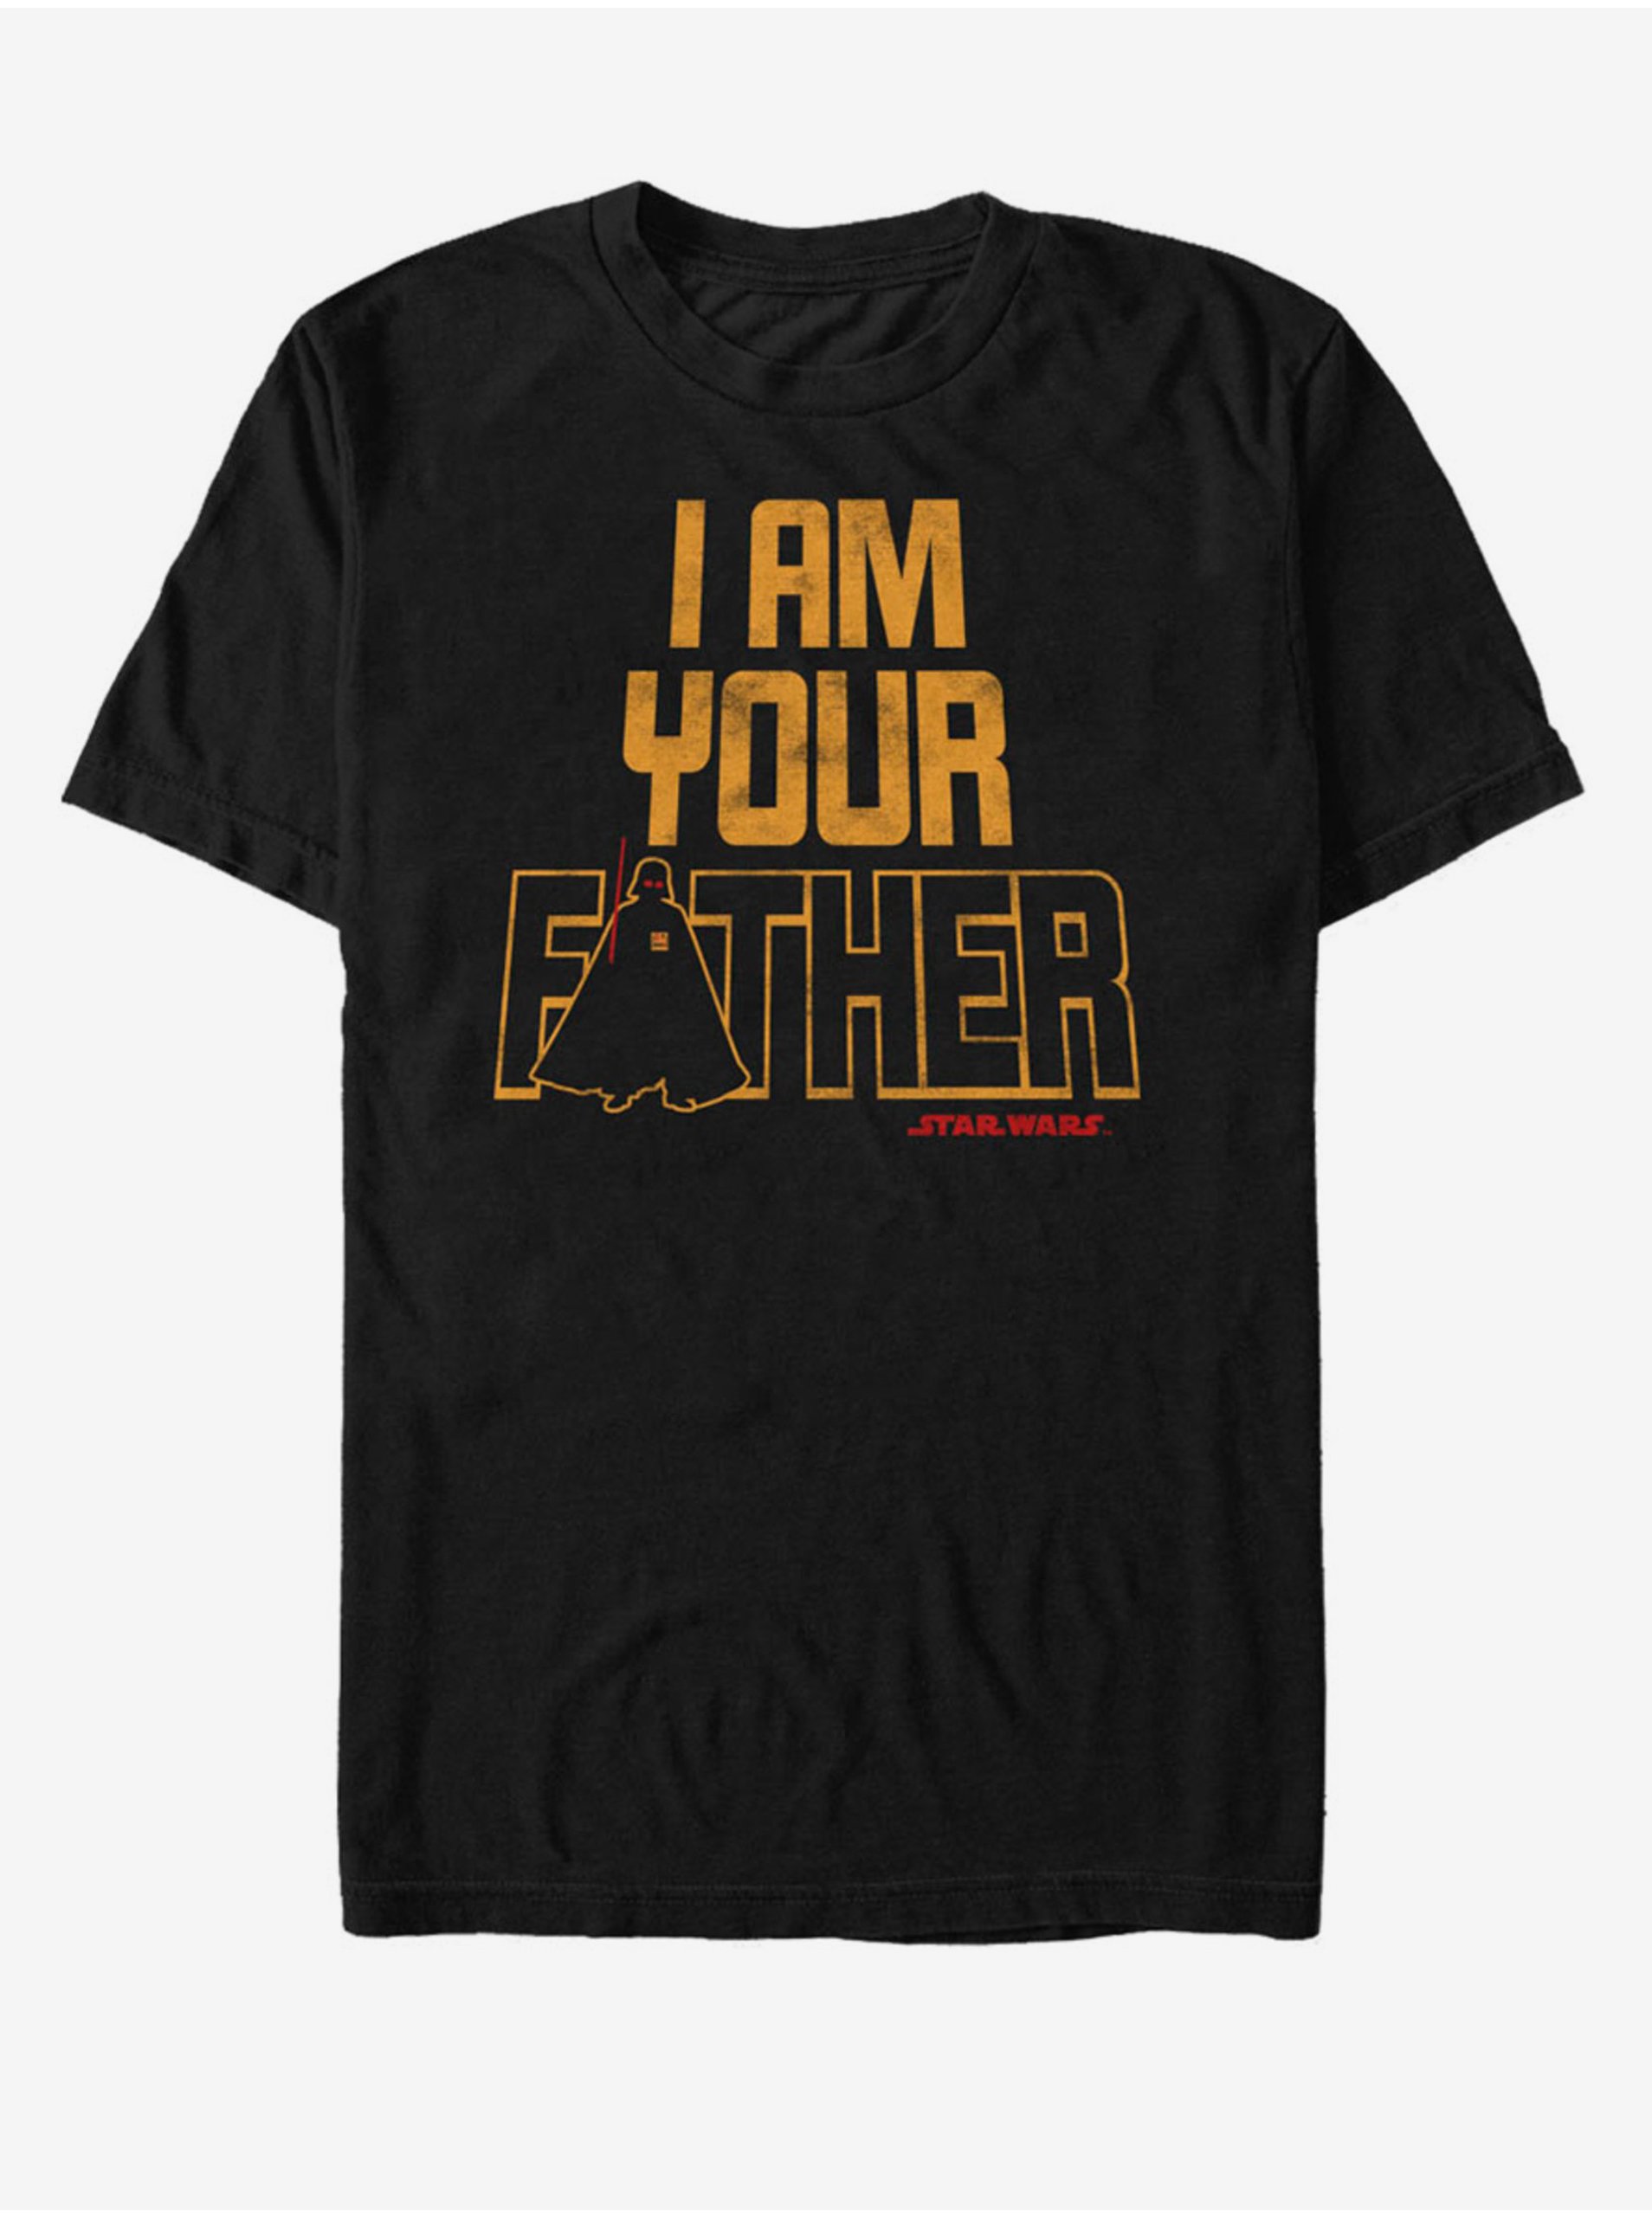 Lacno Černé unisex tričko ZOOT.Fan Star Wars Father Time